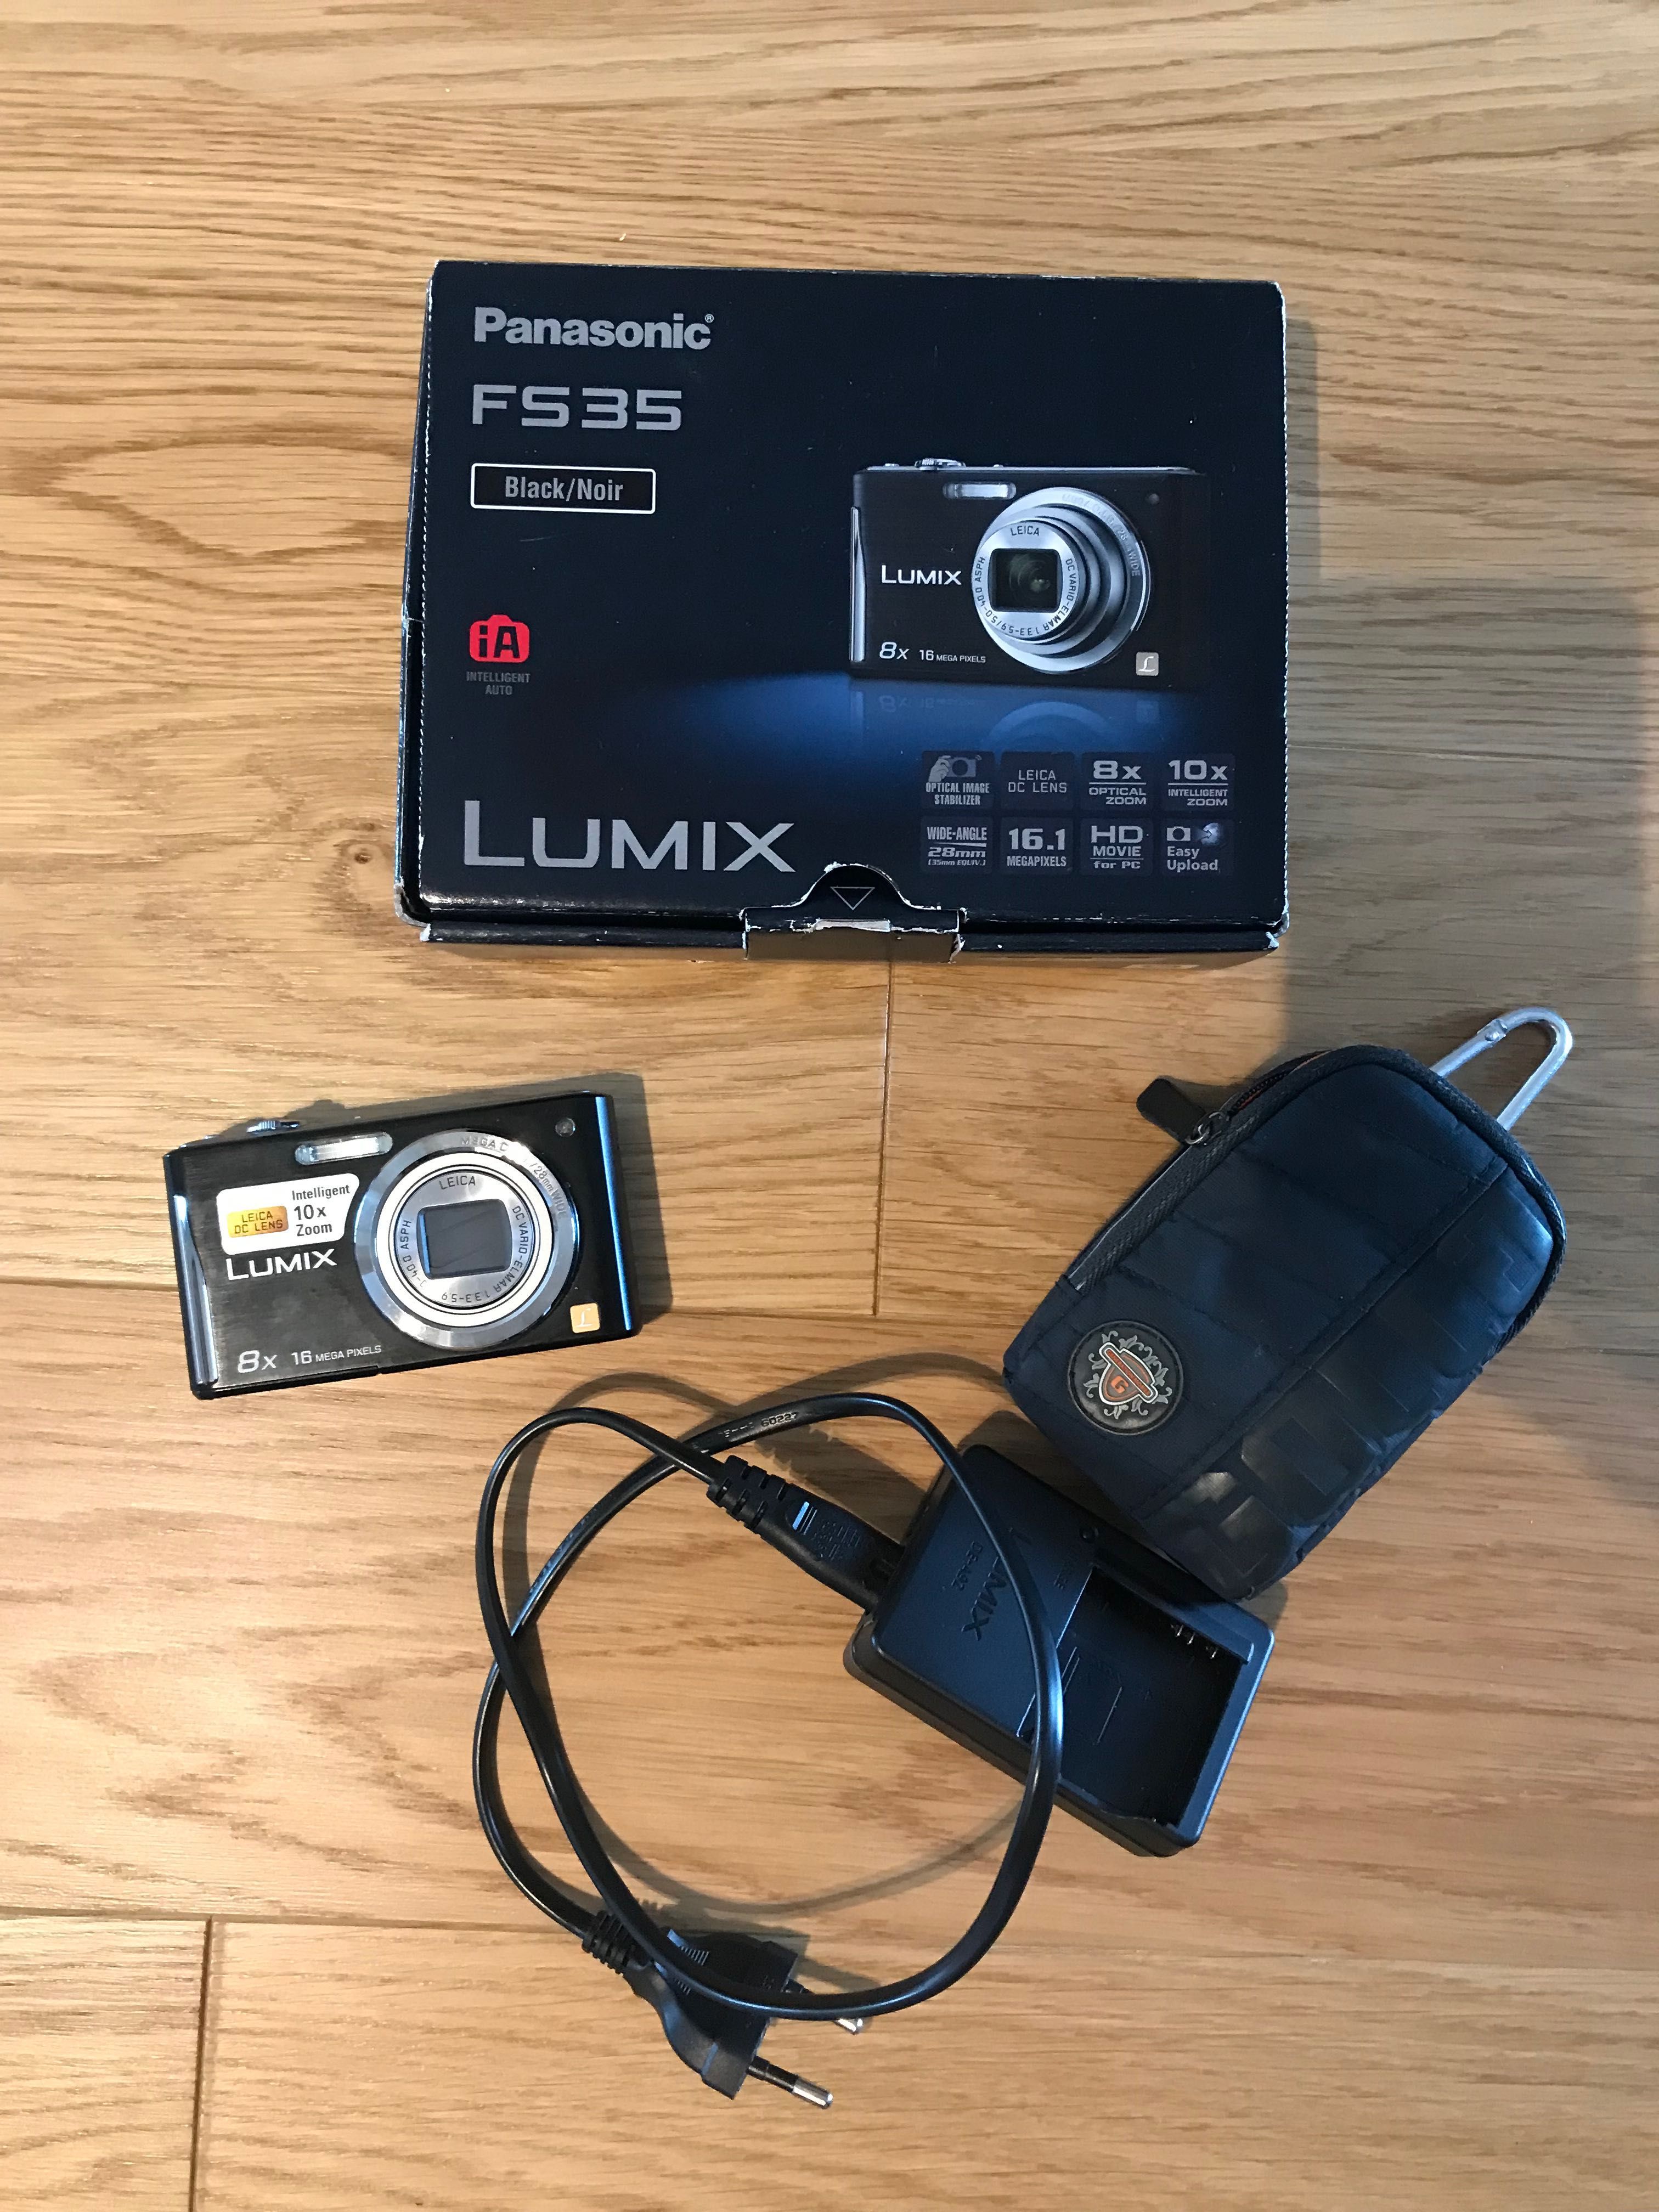 Panasonic Lumix DMC-FS35 Black/Noir